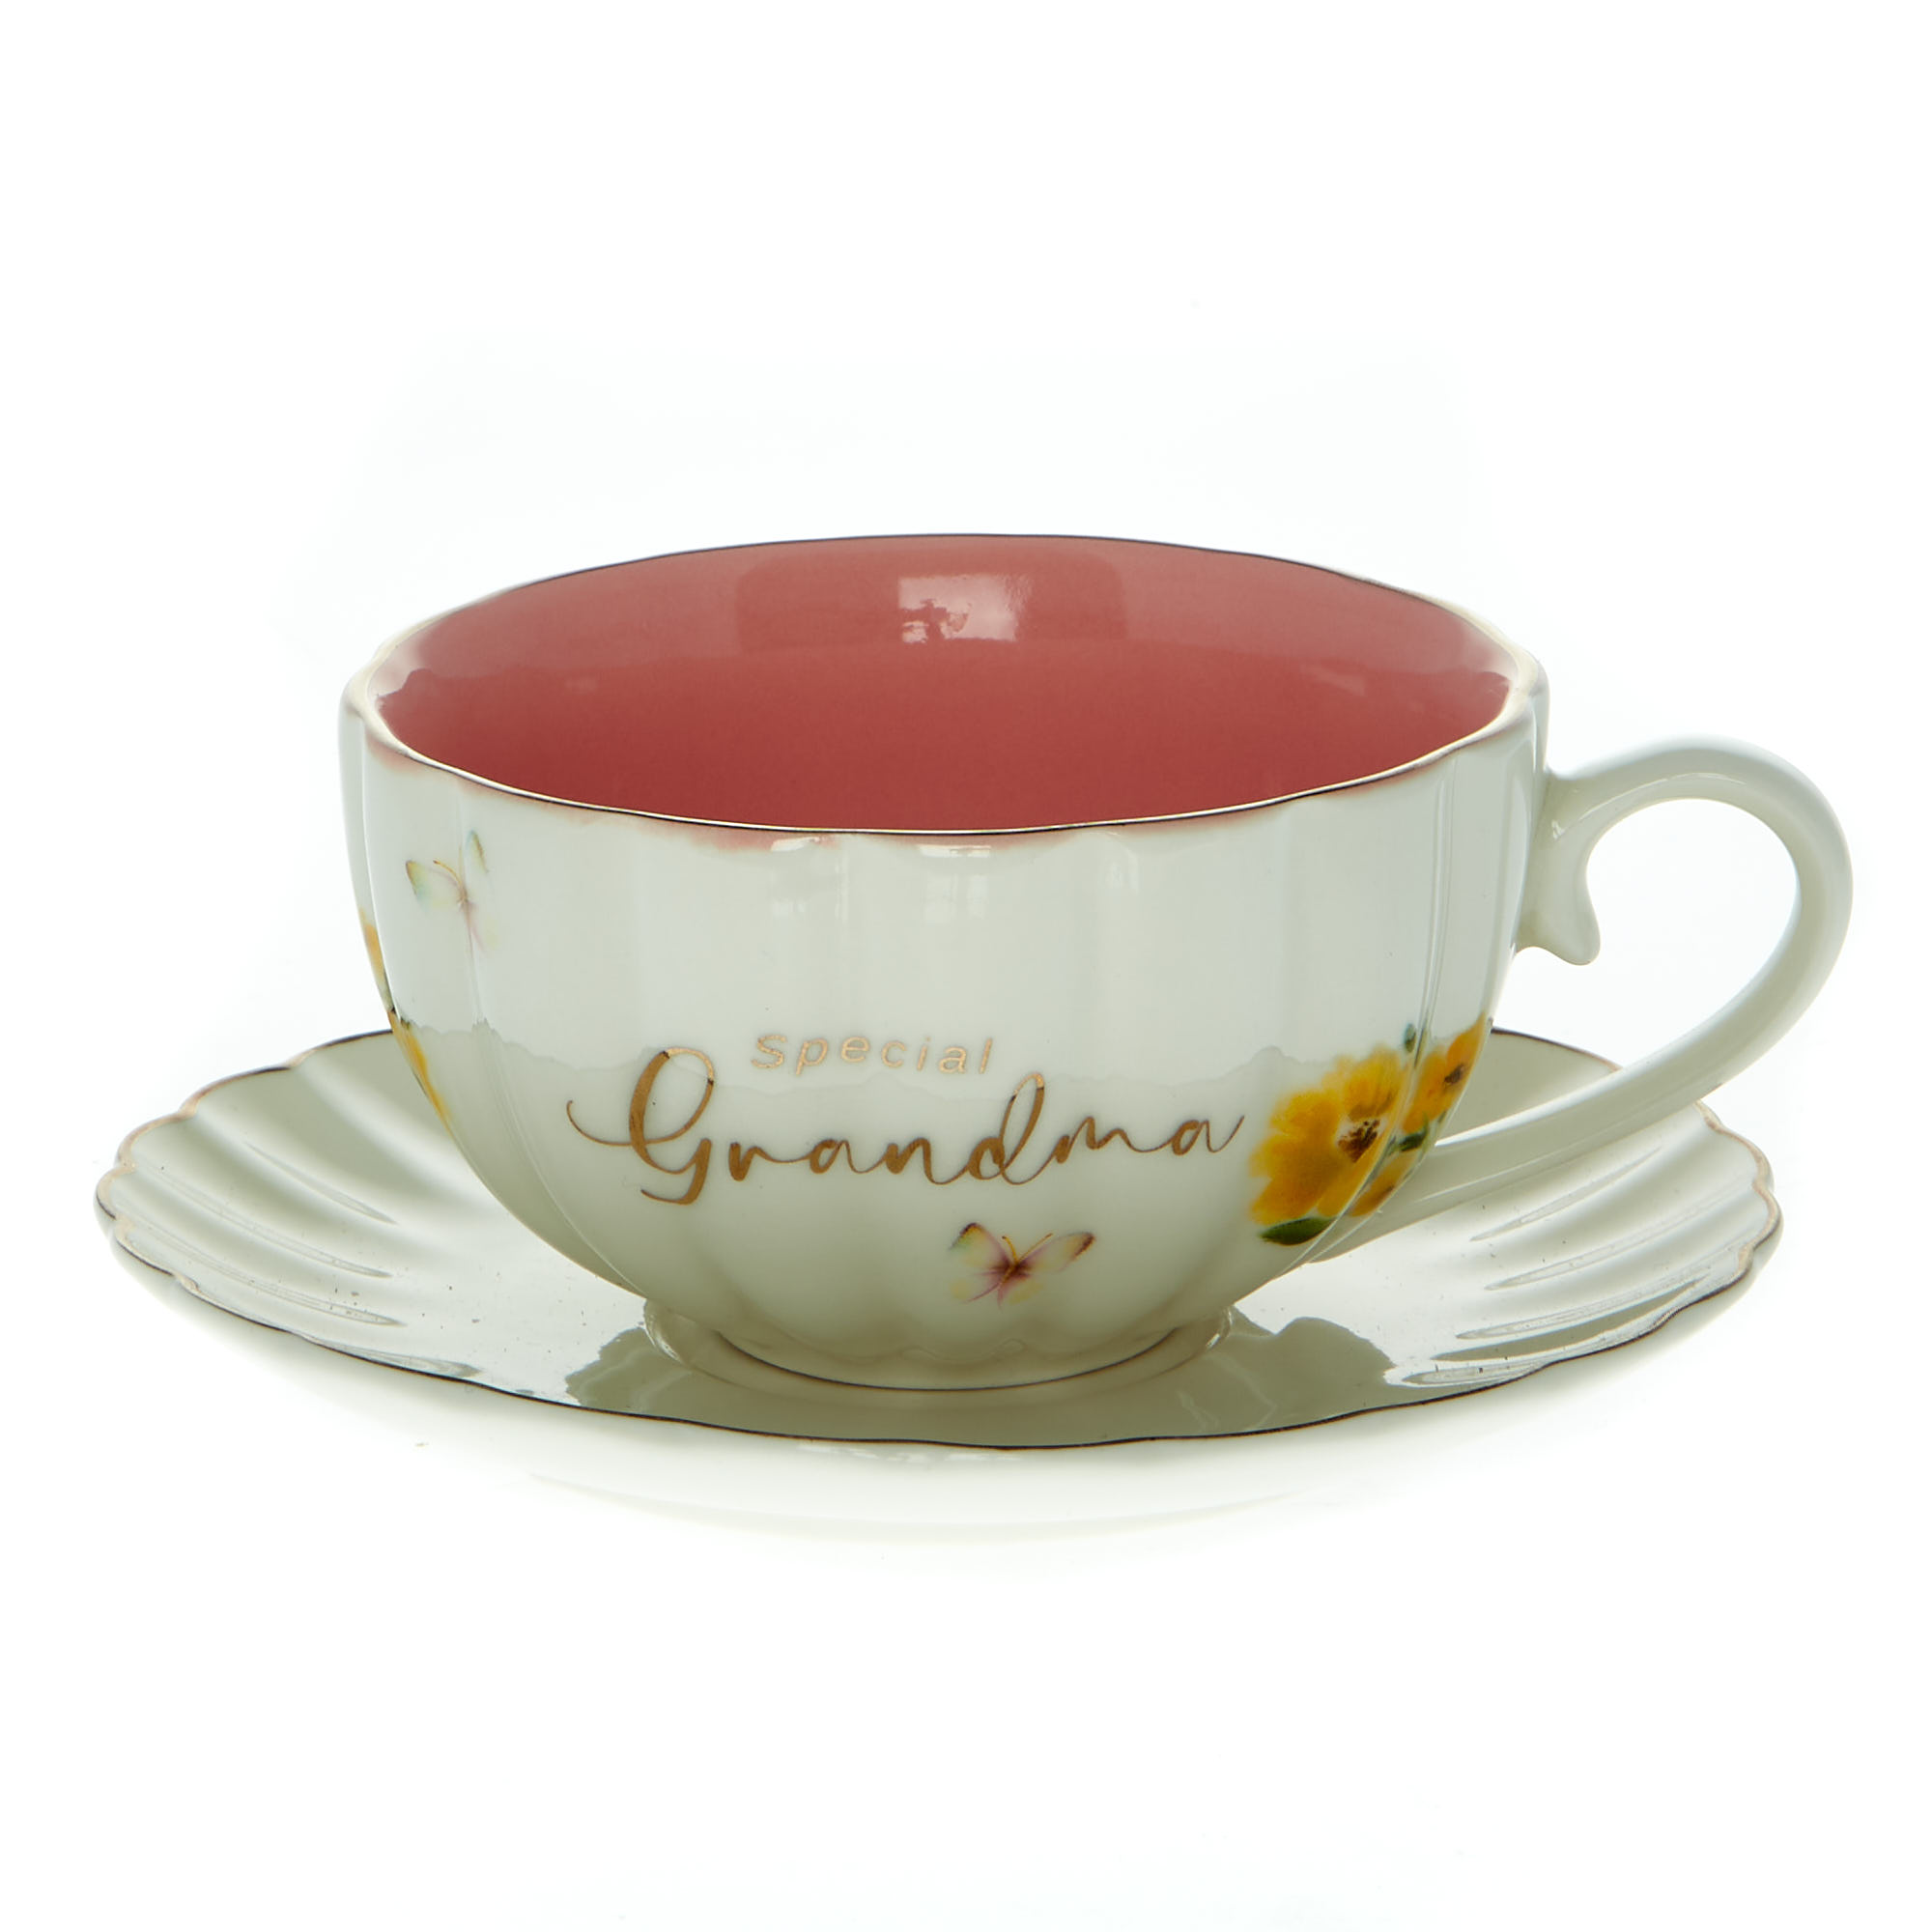 Special Grandma Cup & Saucer